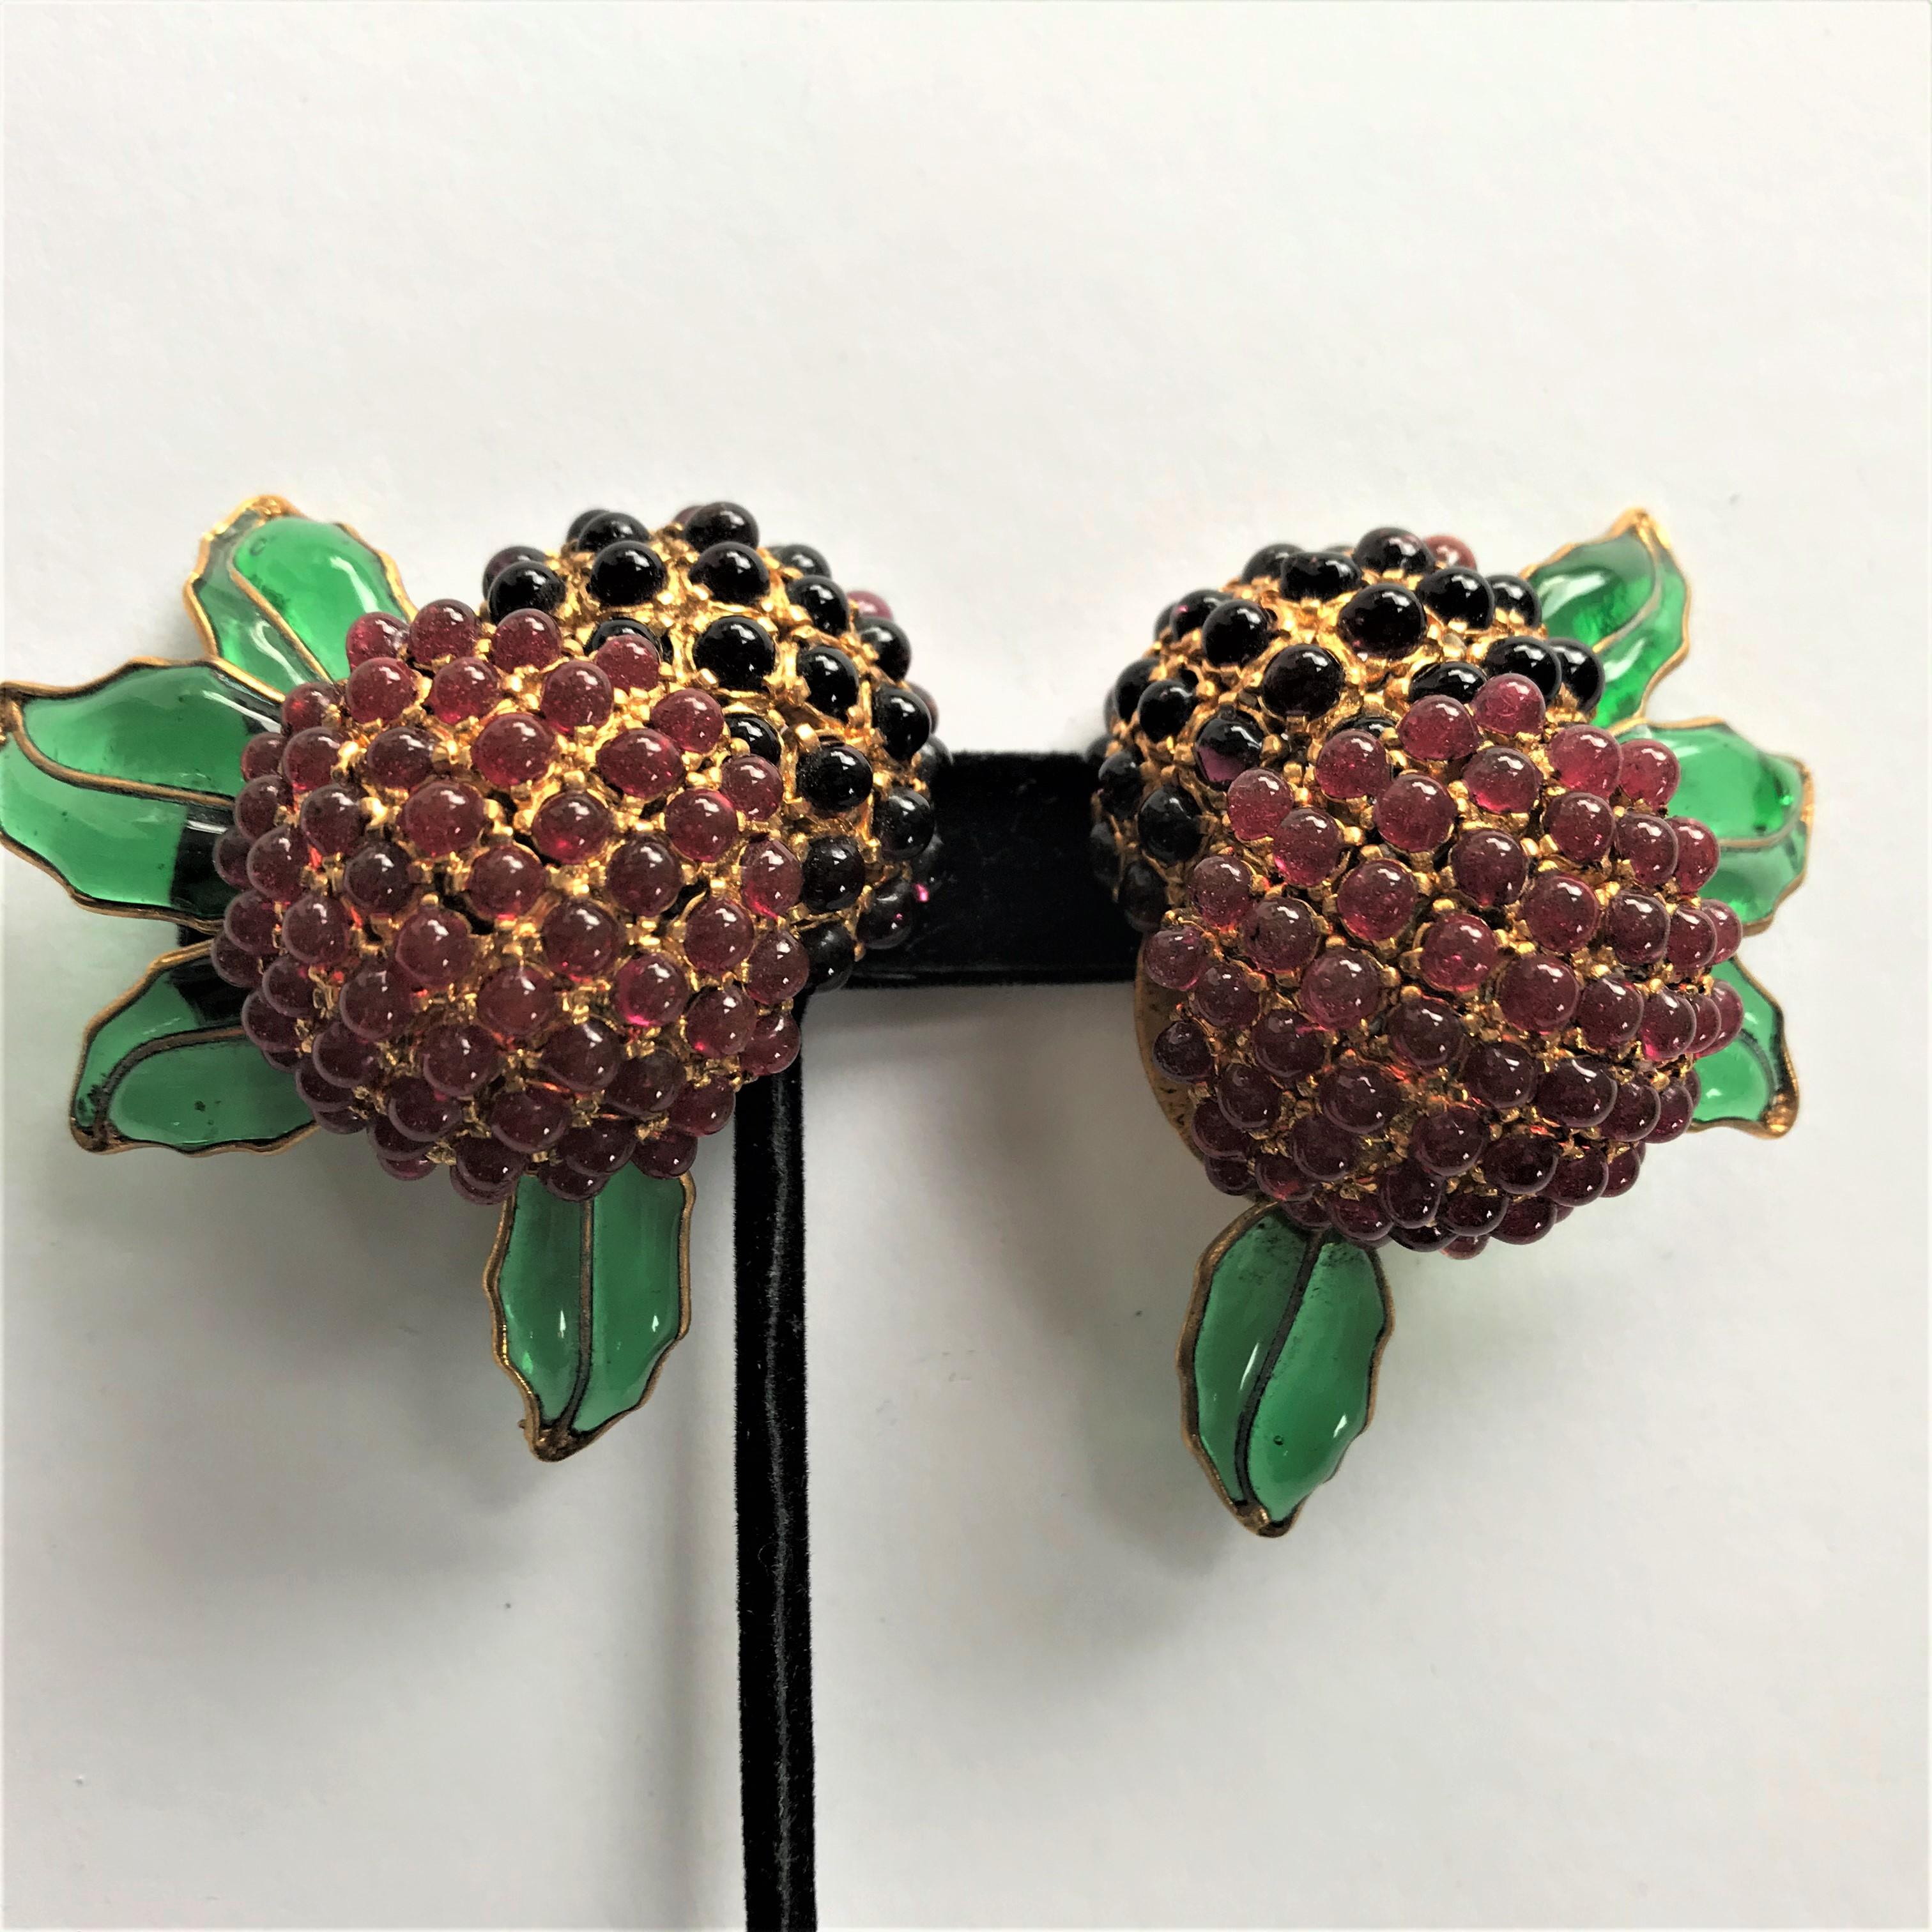 Artisan Chanel ear clips in the shape of 2 blackberries Maison Gripoix 1970/80s g. plate